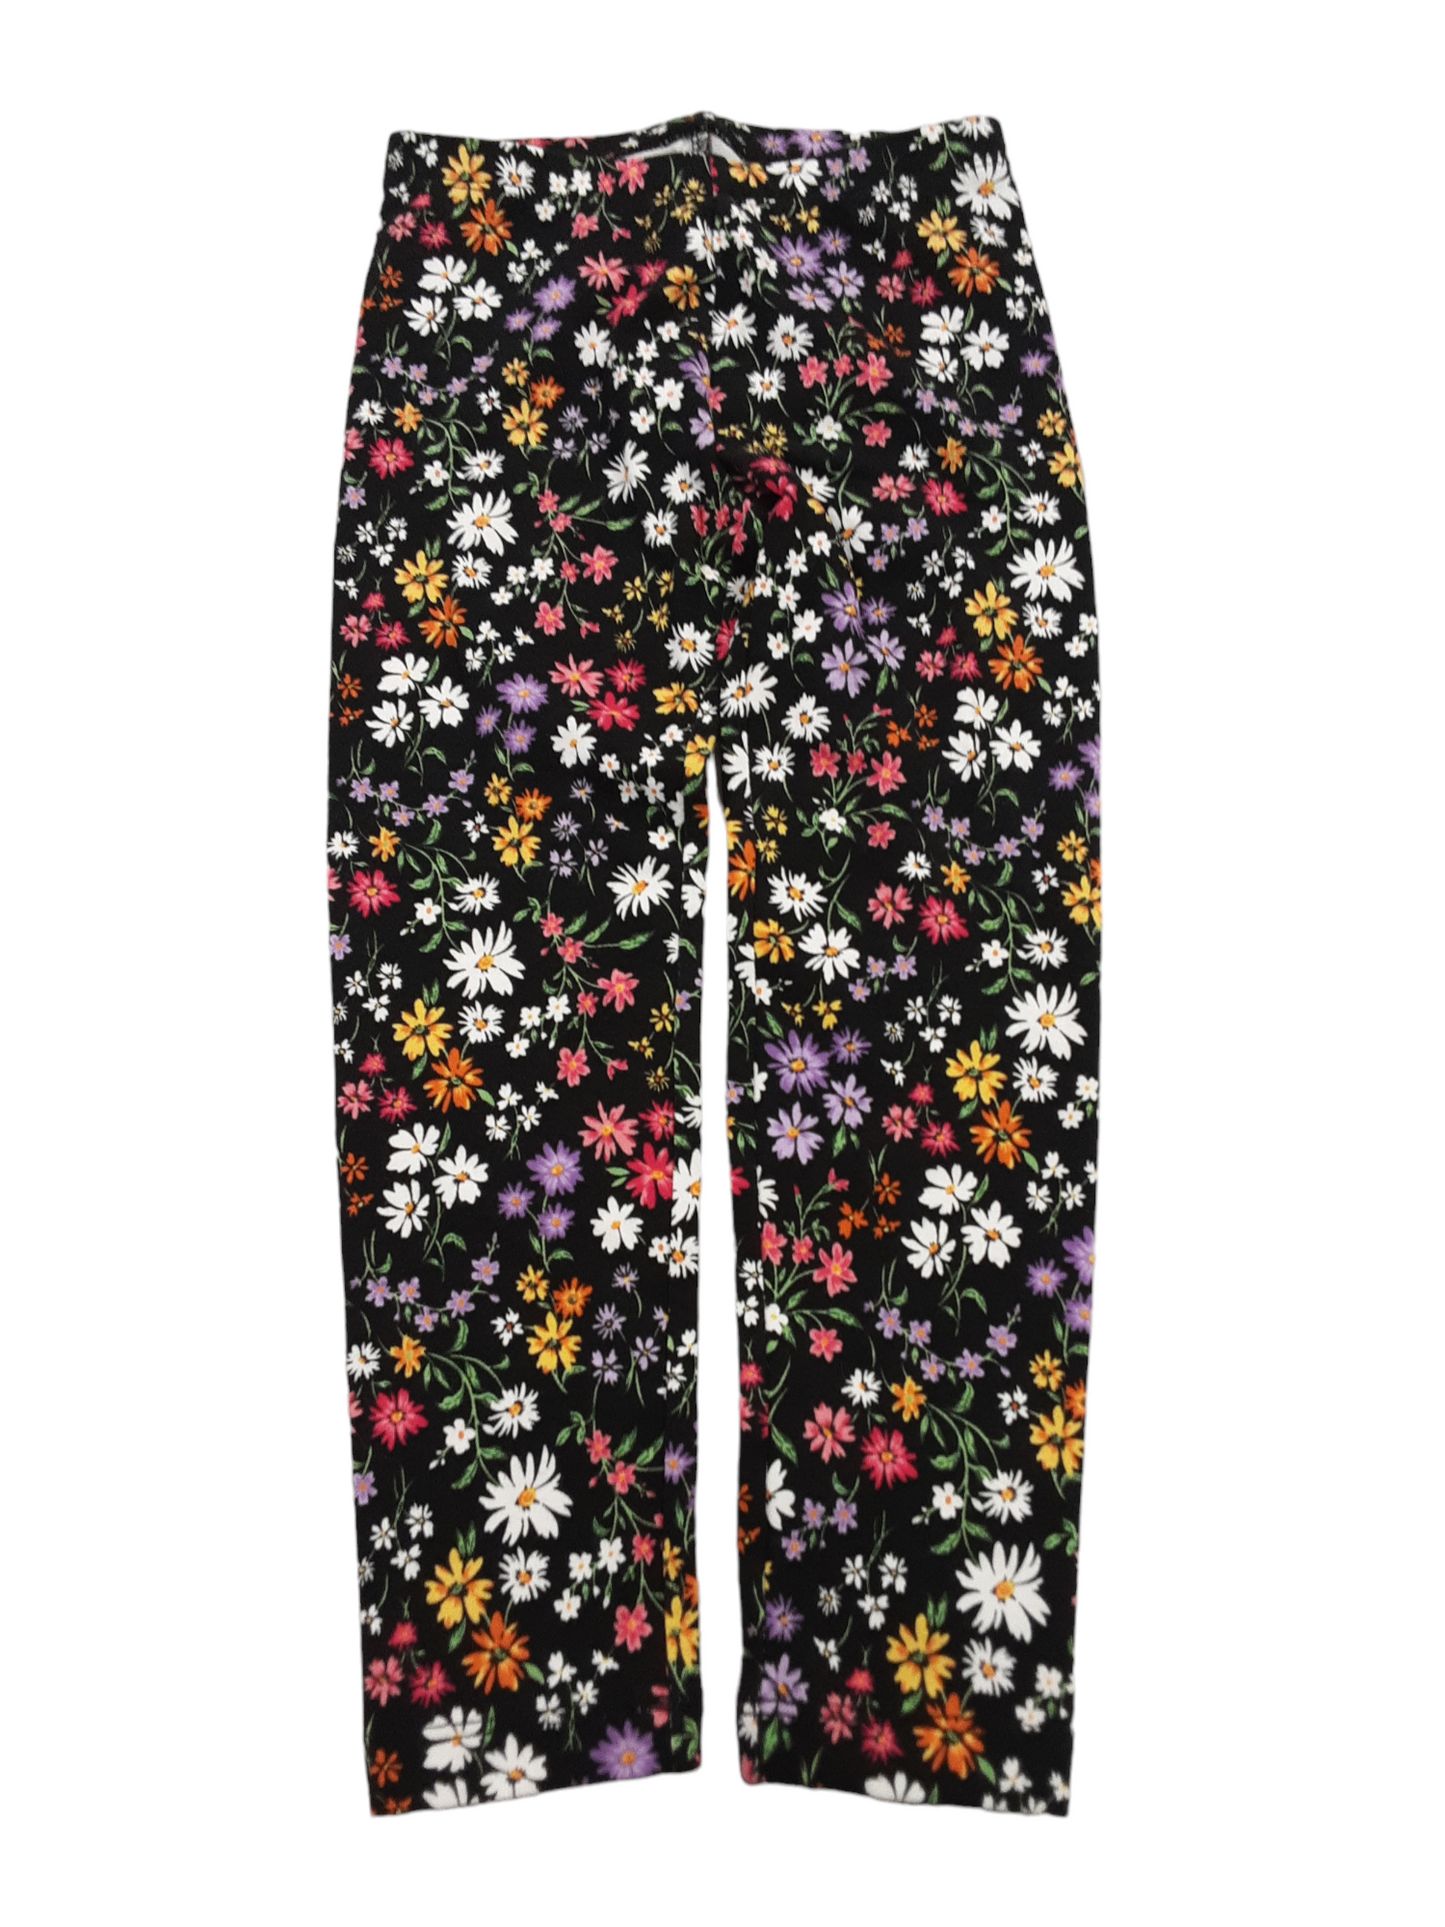 Spring floral leggings size 4